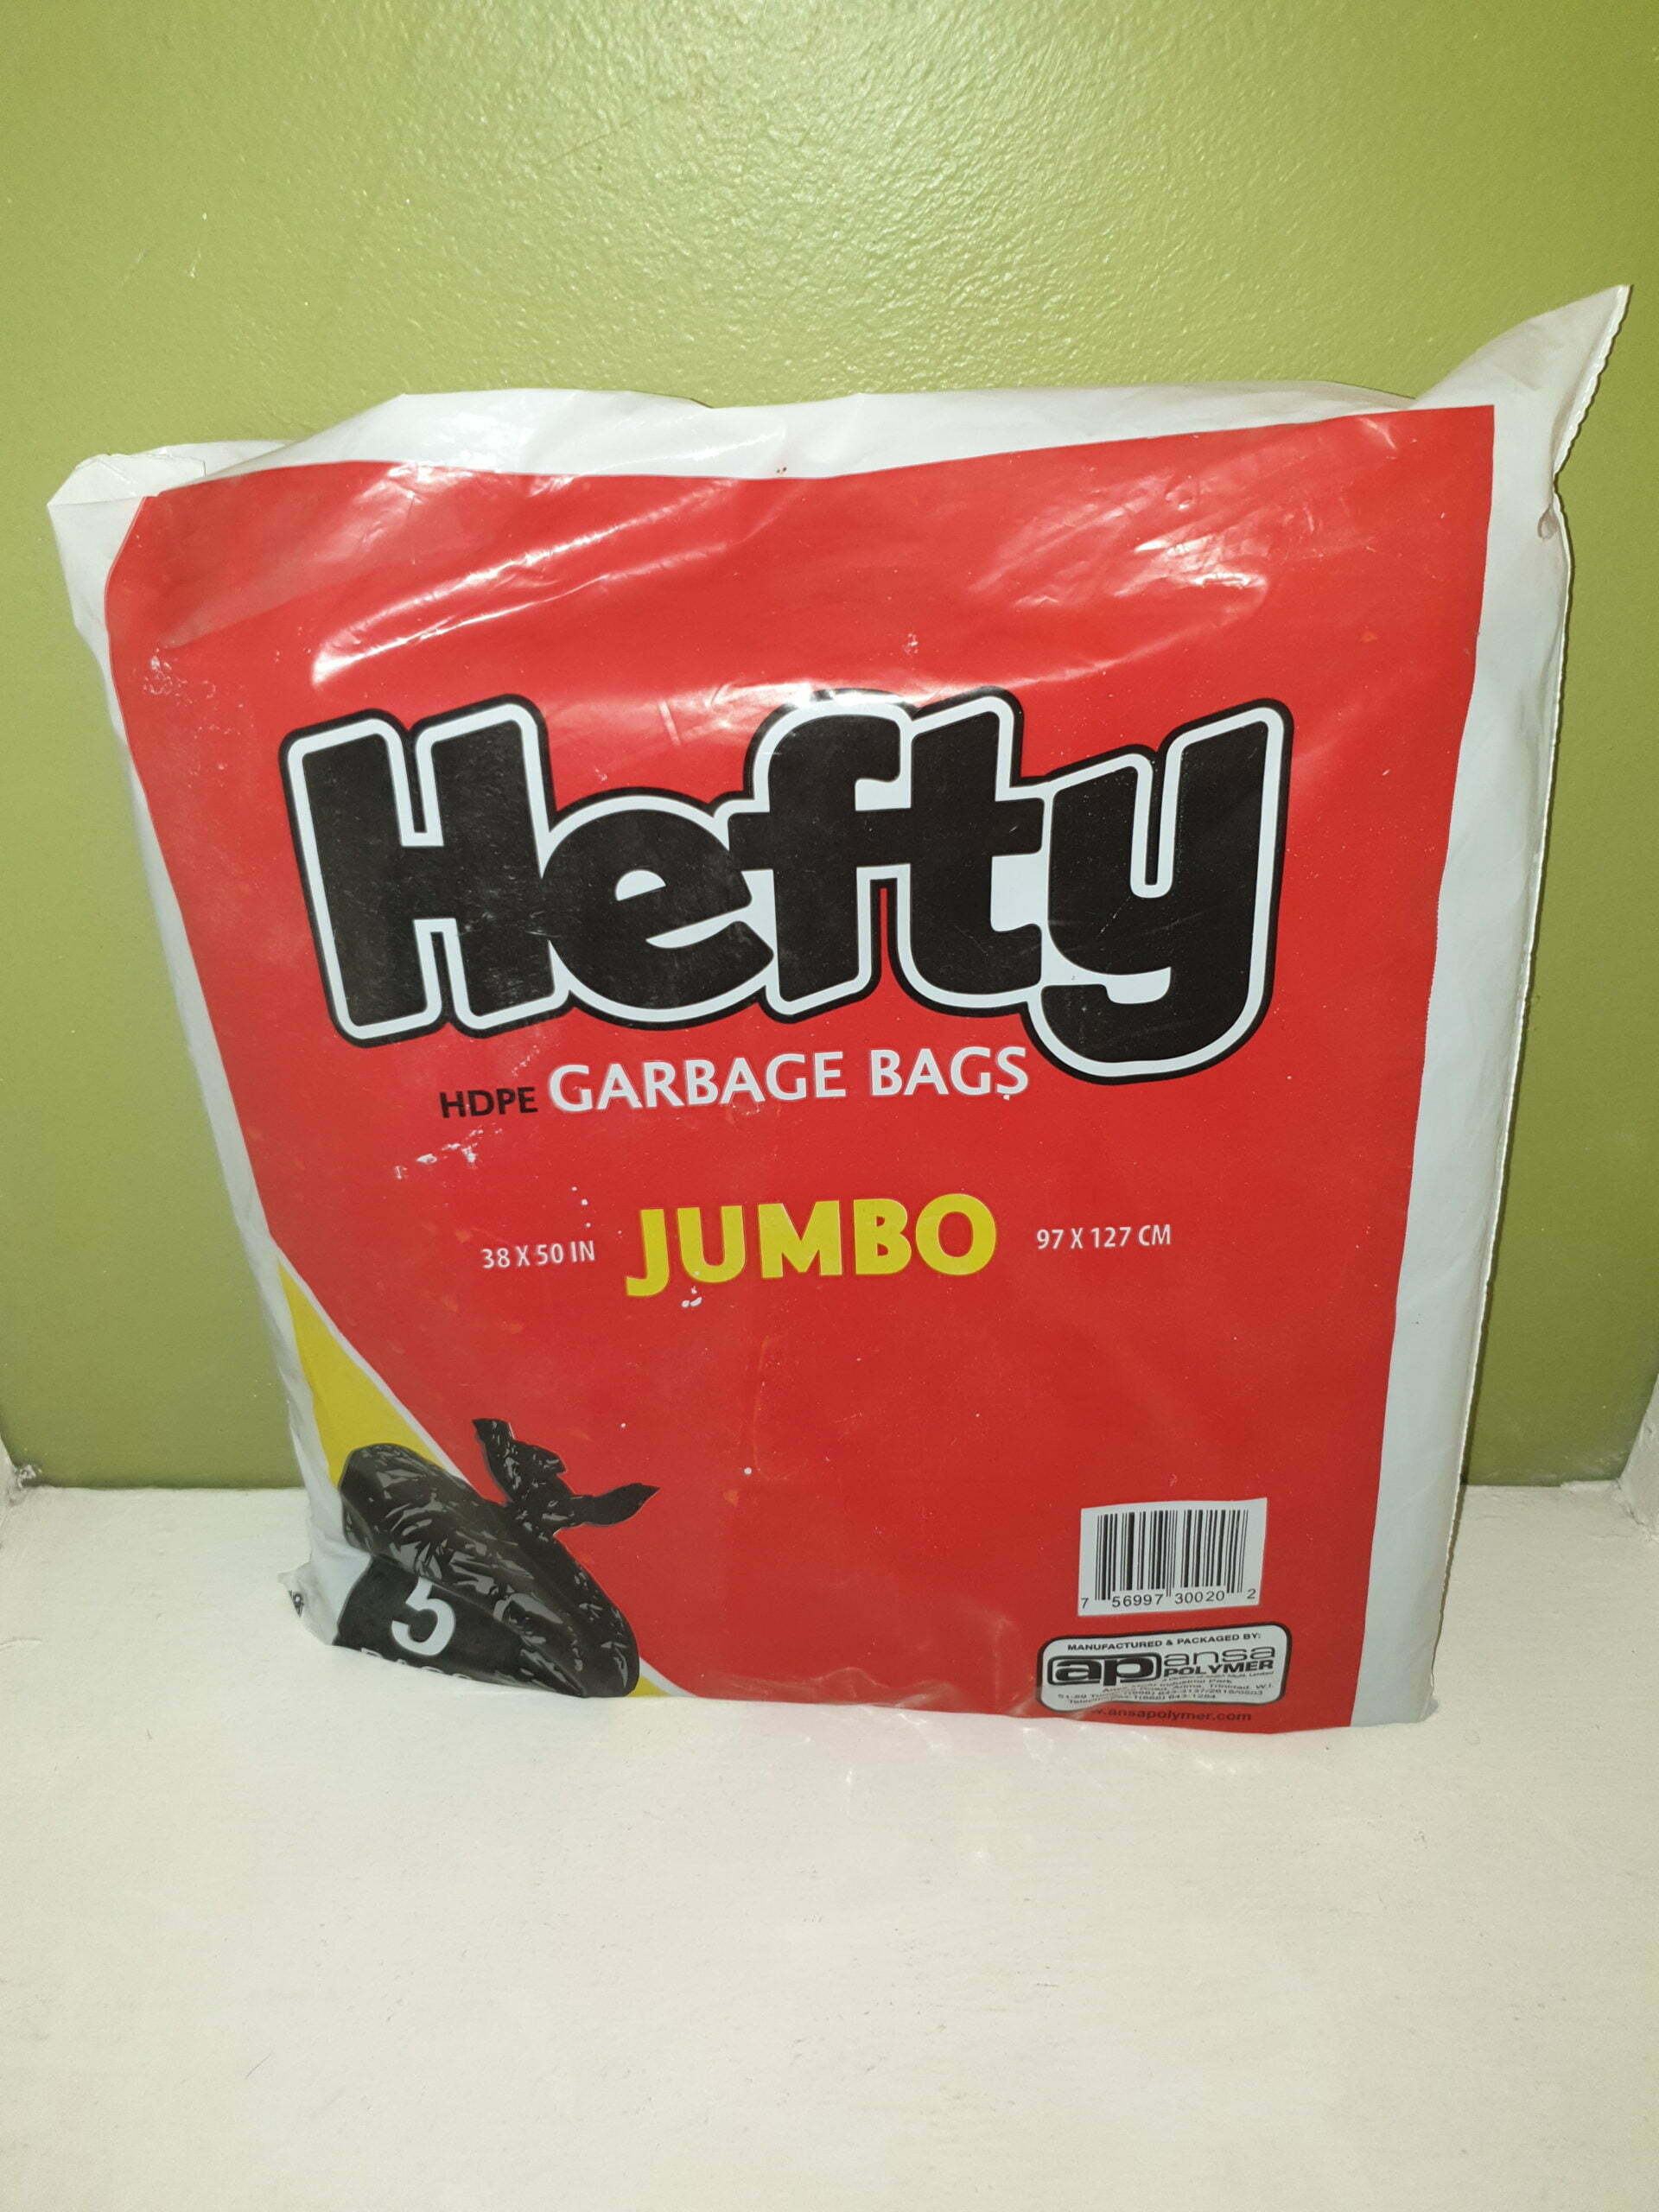 Hefty Garbage Bags Jumbo - ANSA McAL